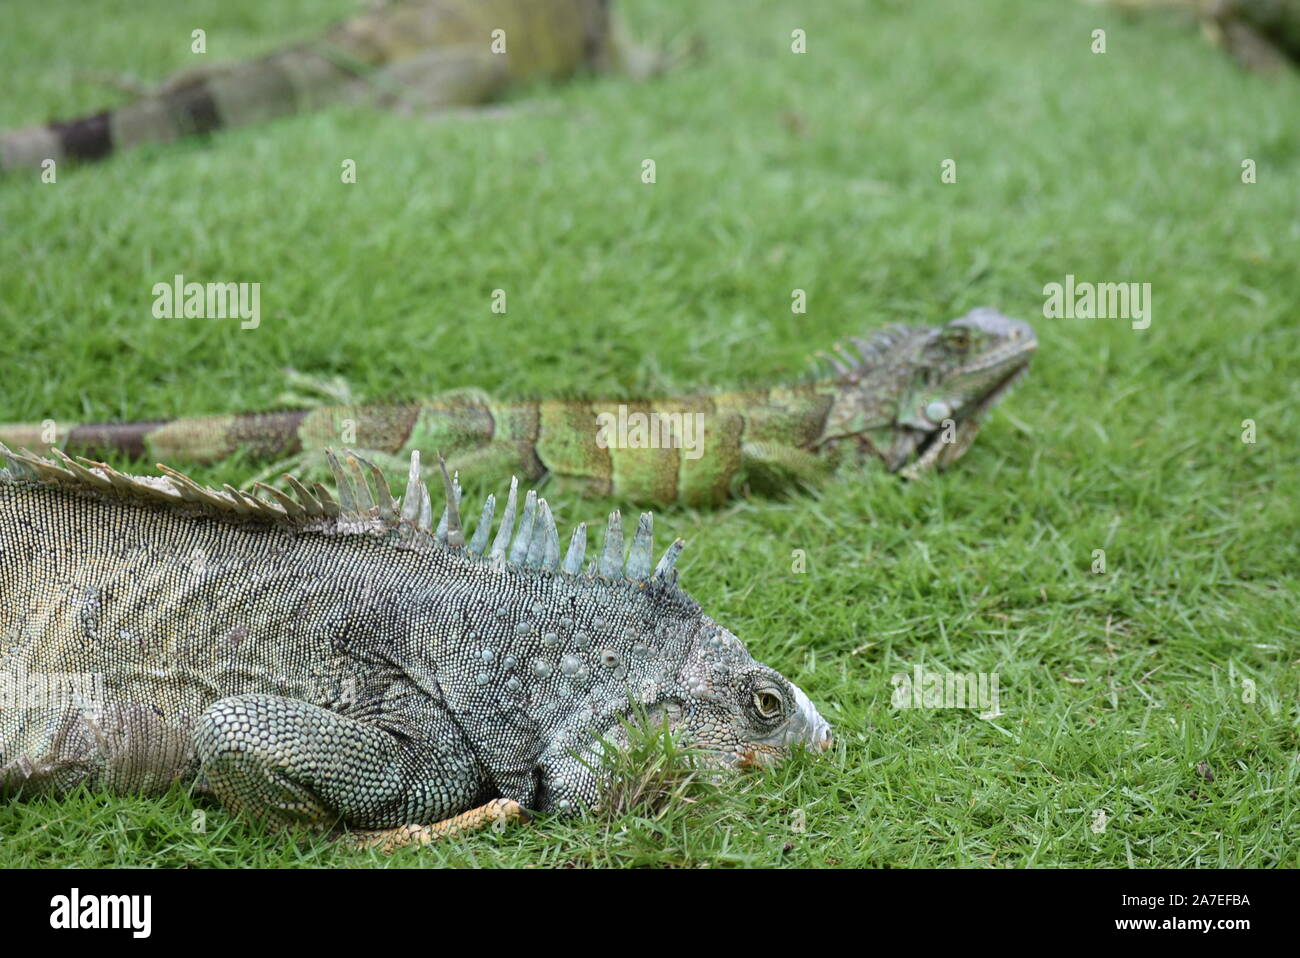 Iguana in the iguanas park in Guayaquil, Ecuador Stock Photo